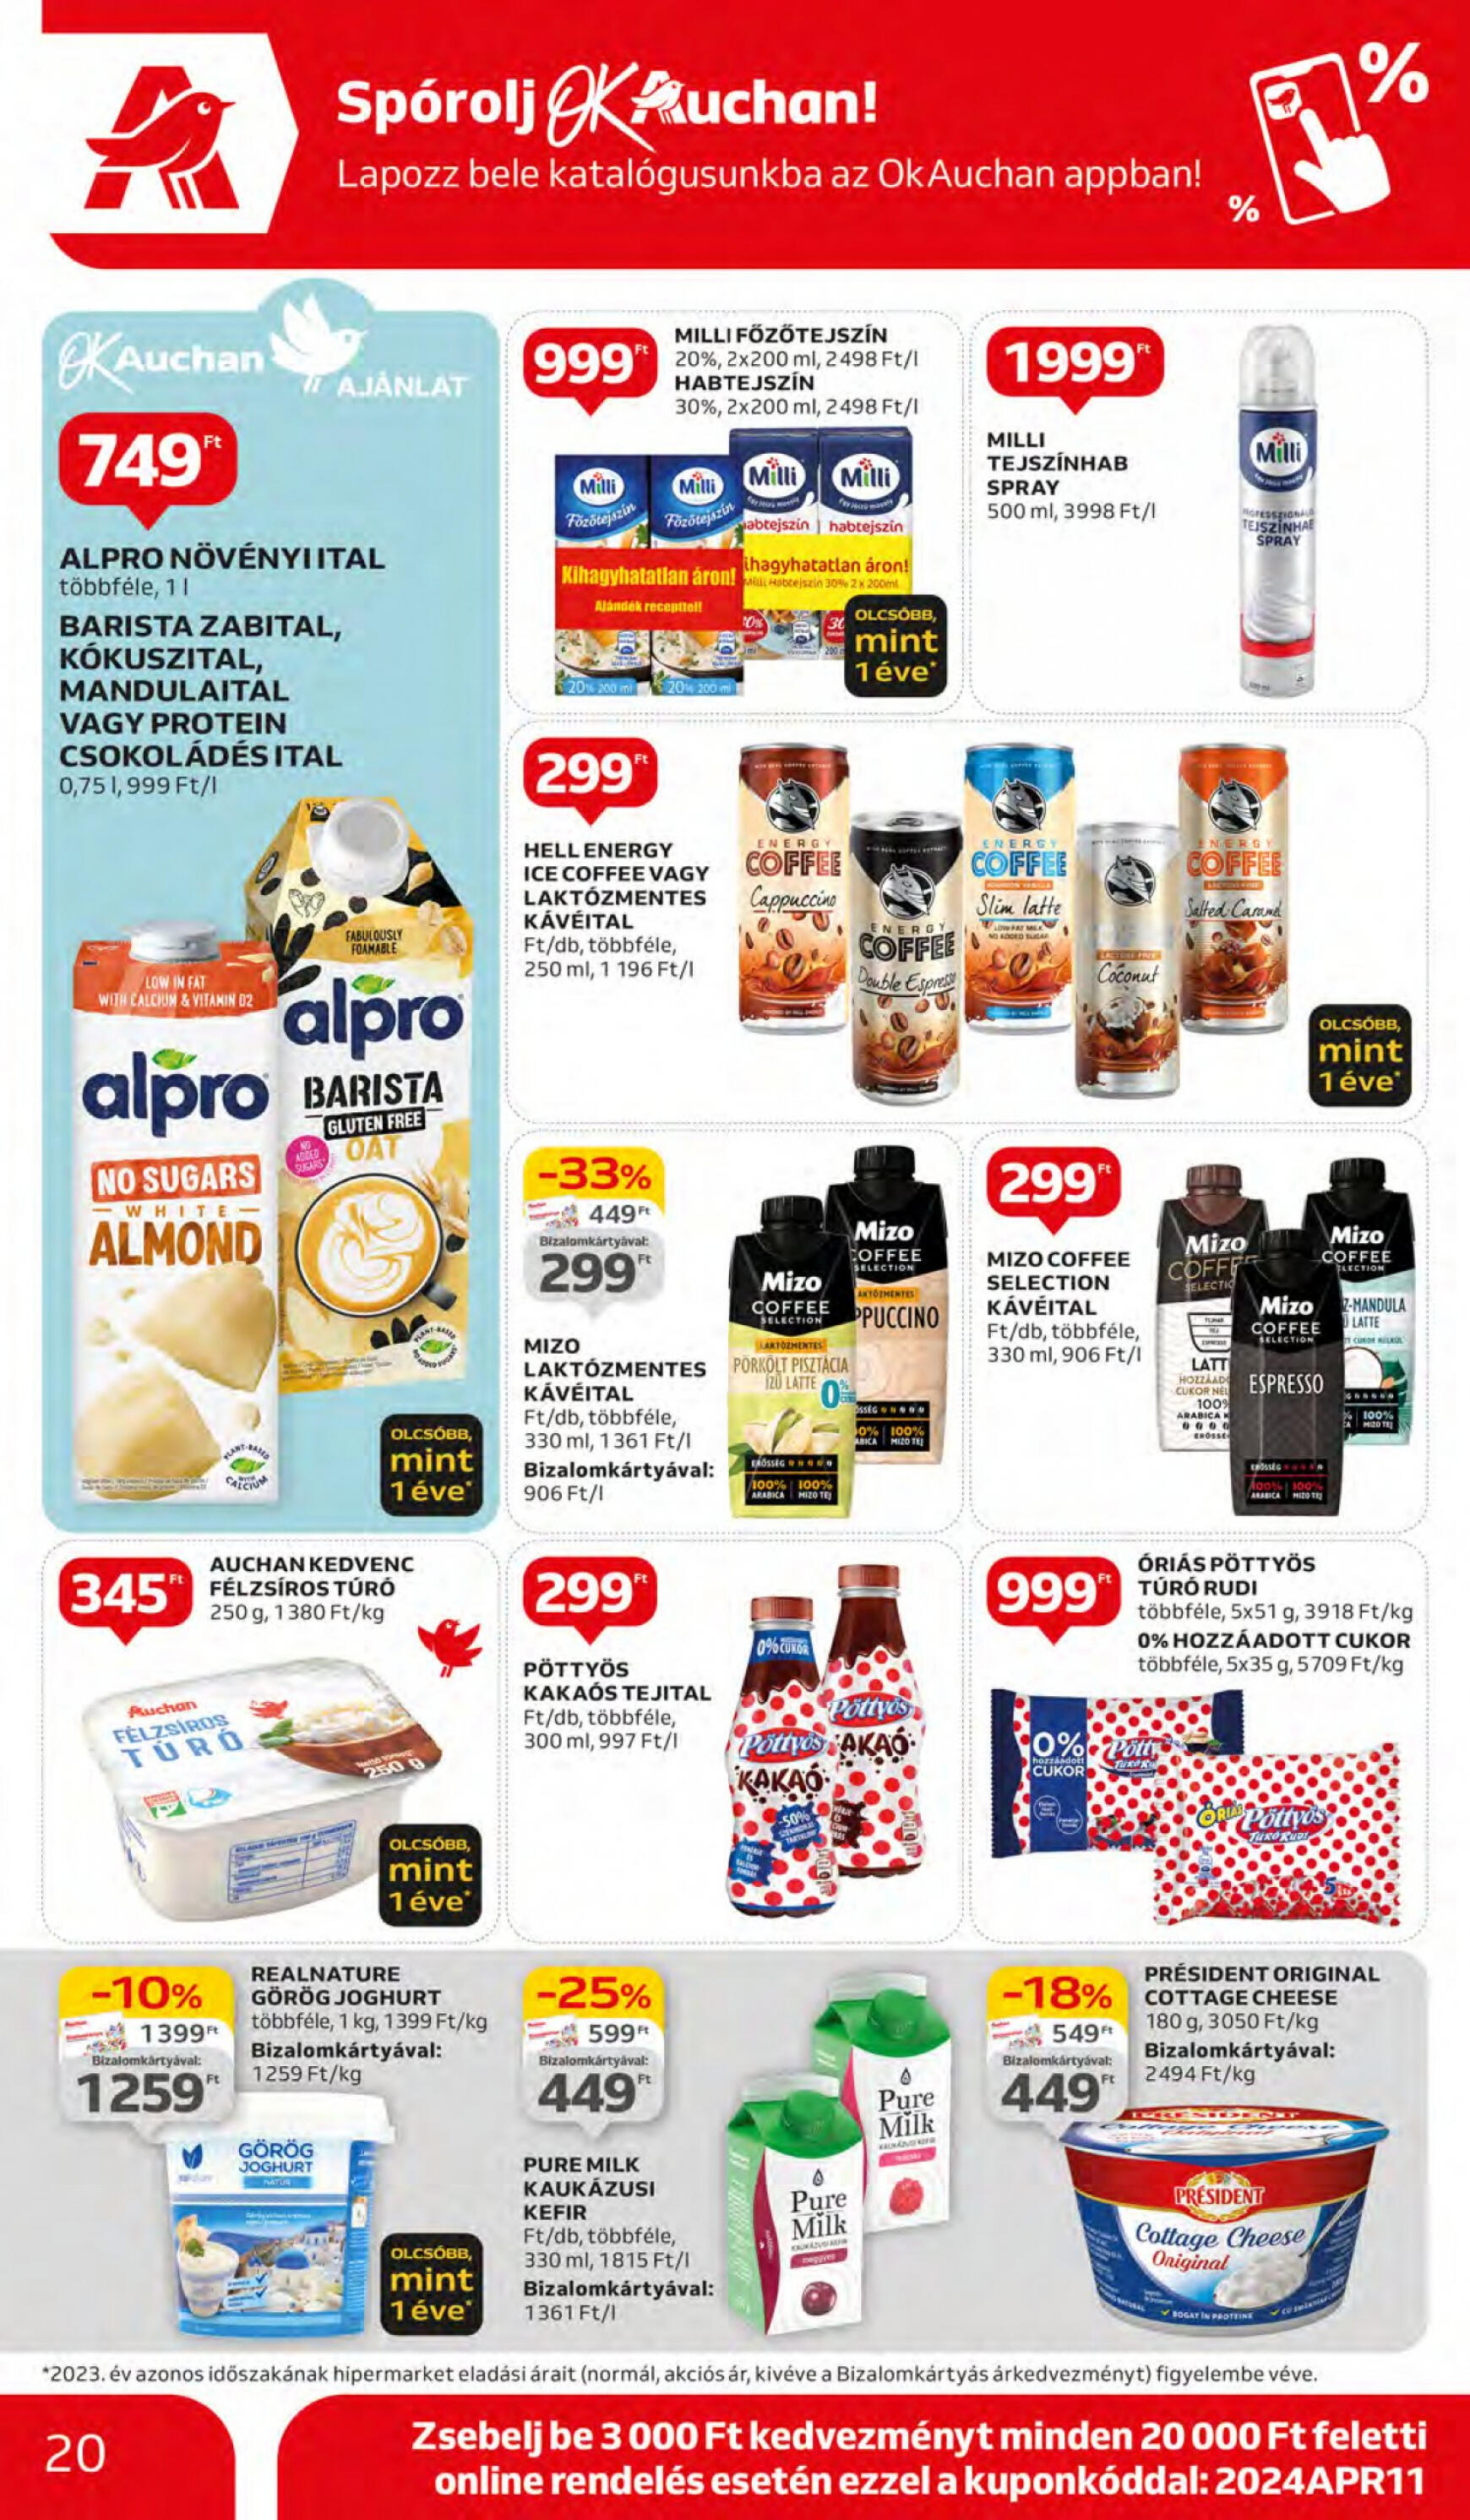 auchan - Aktuális újság Auchan 04.11. - 04.17. - page: 20